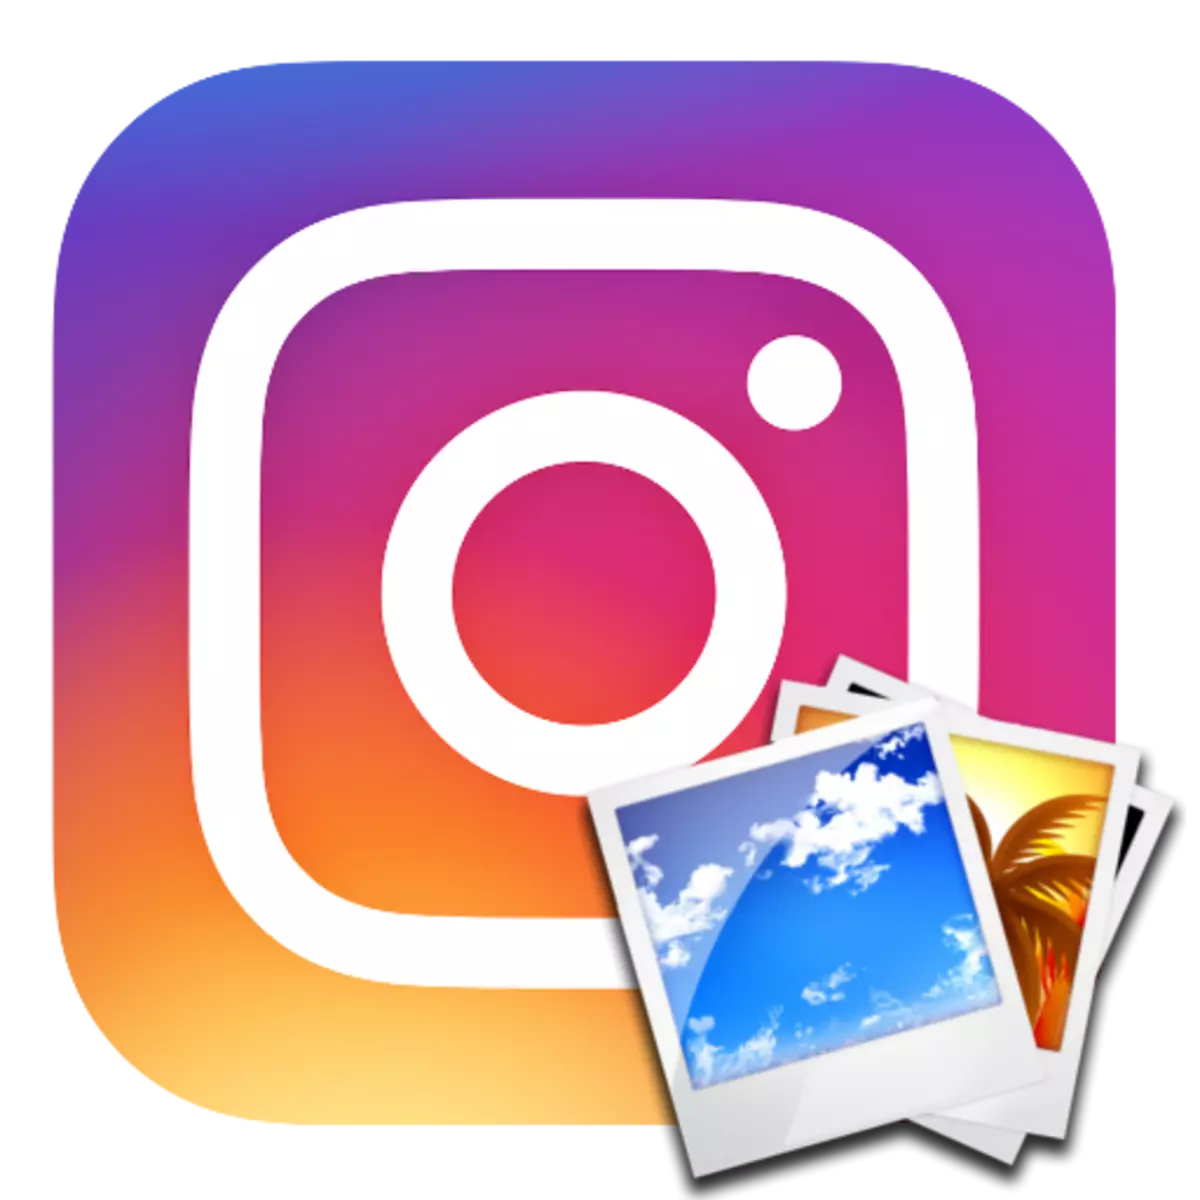 Instagram ታሪክ ውስጥ አንድ ፎቶ ማከል እንደሚቻል